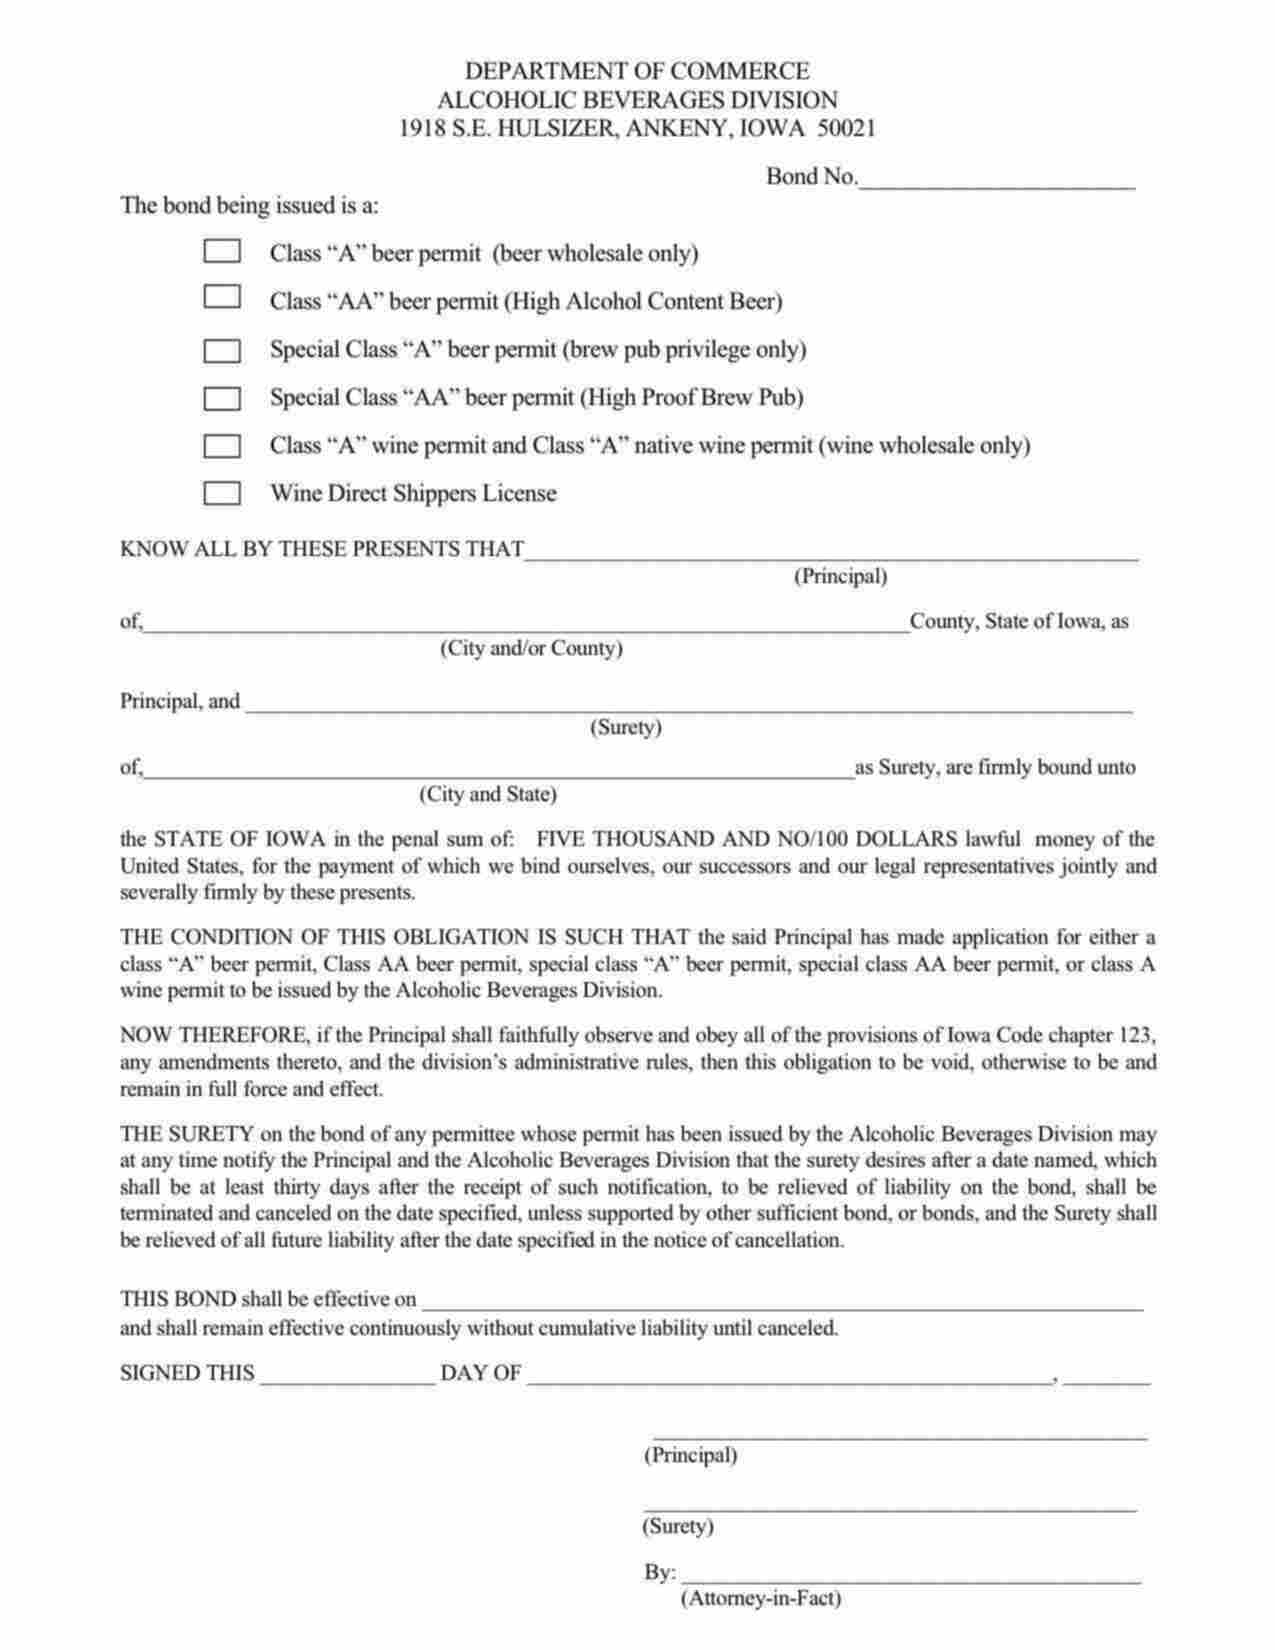 Iowa Special Class AA Beer Permit (High Proof Brew Pub) Bond Form